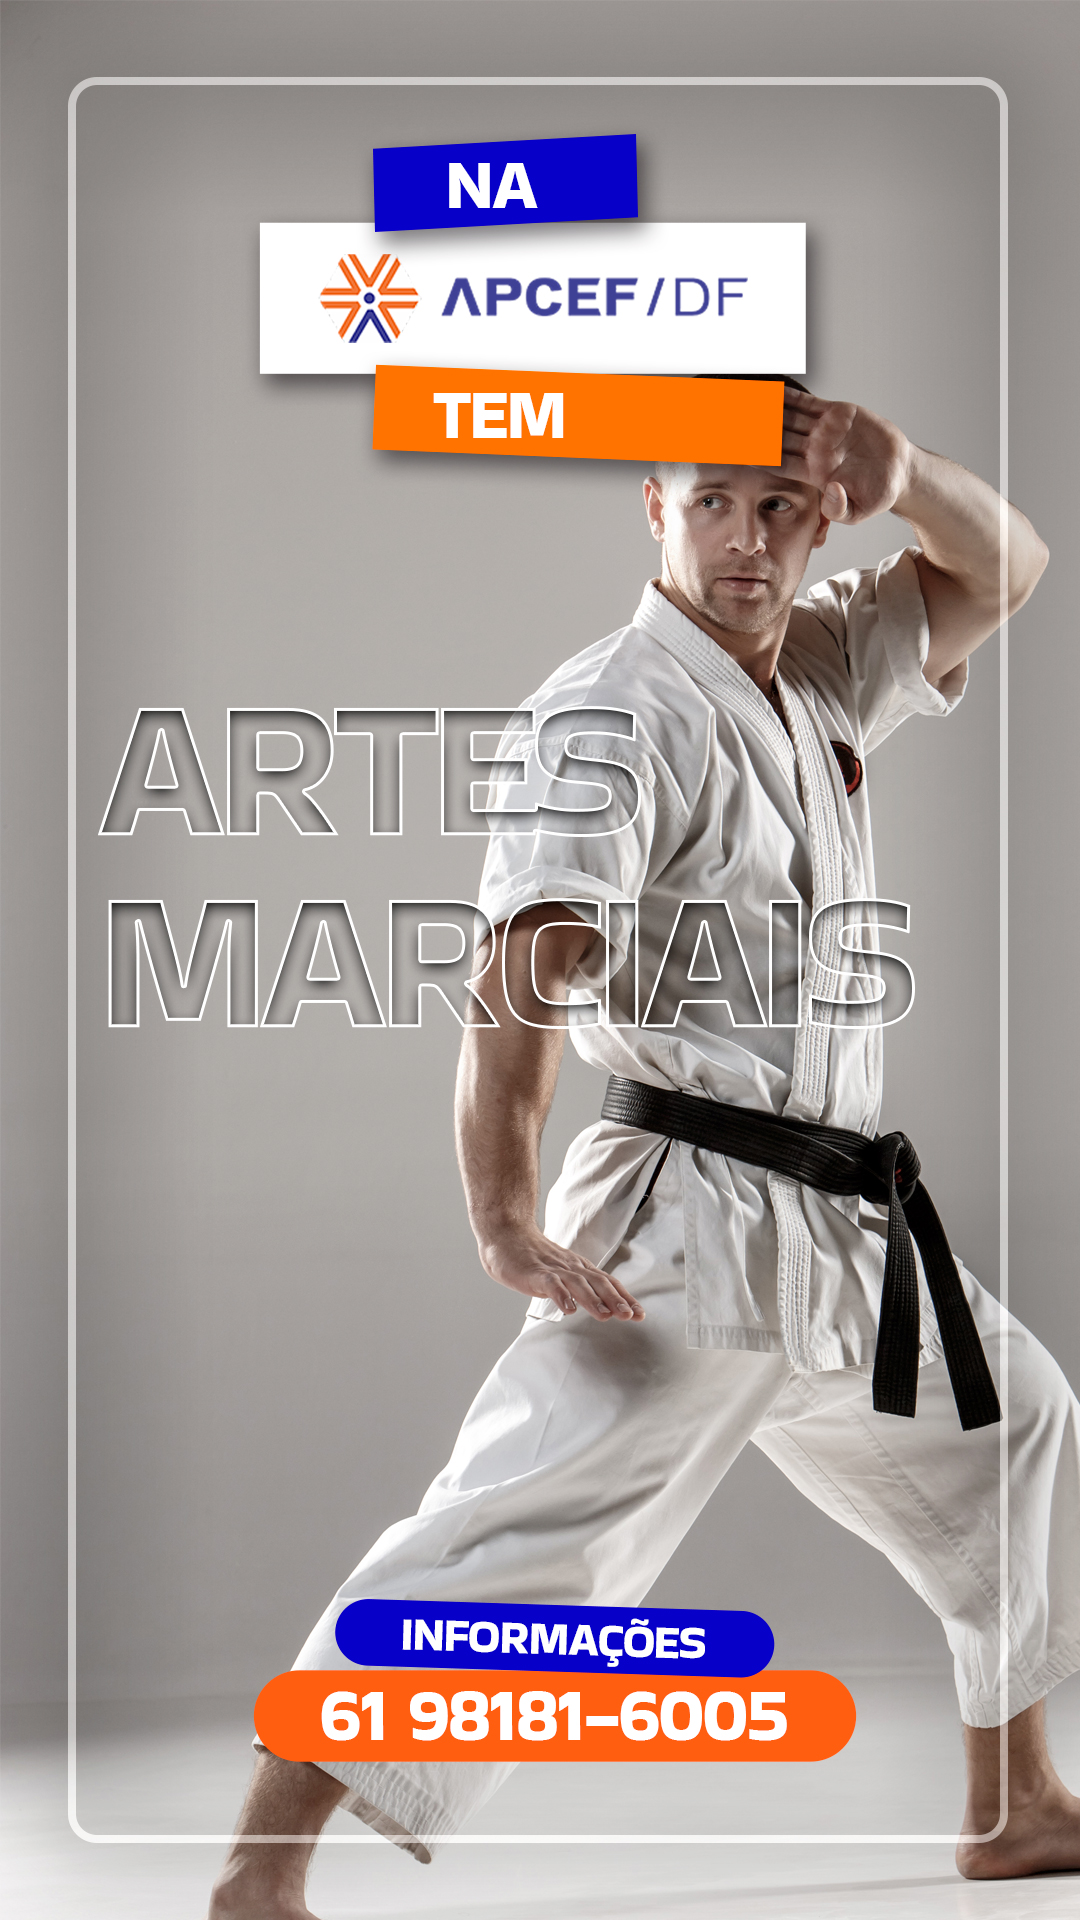 ARTES-MARCIAIS-1080x1920.jpg